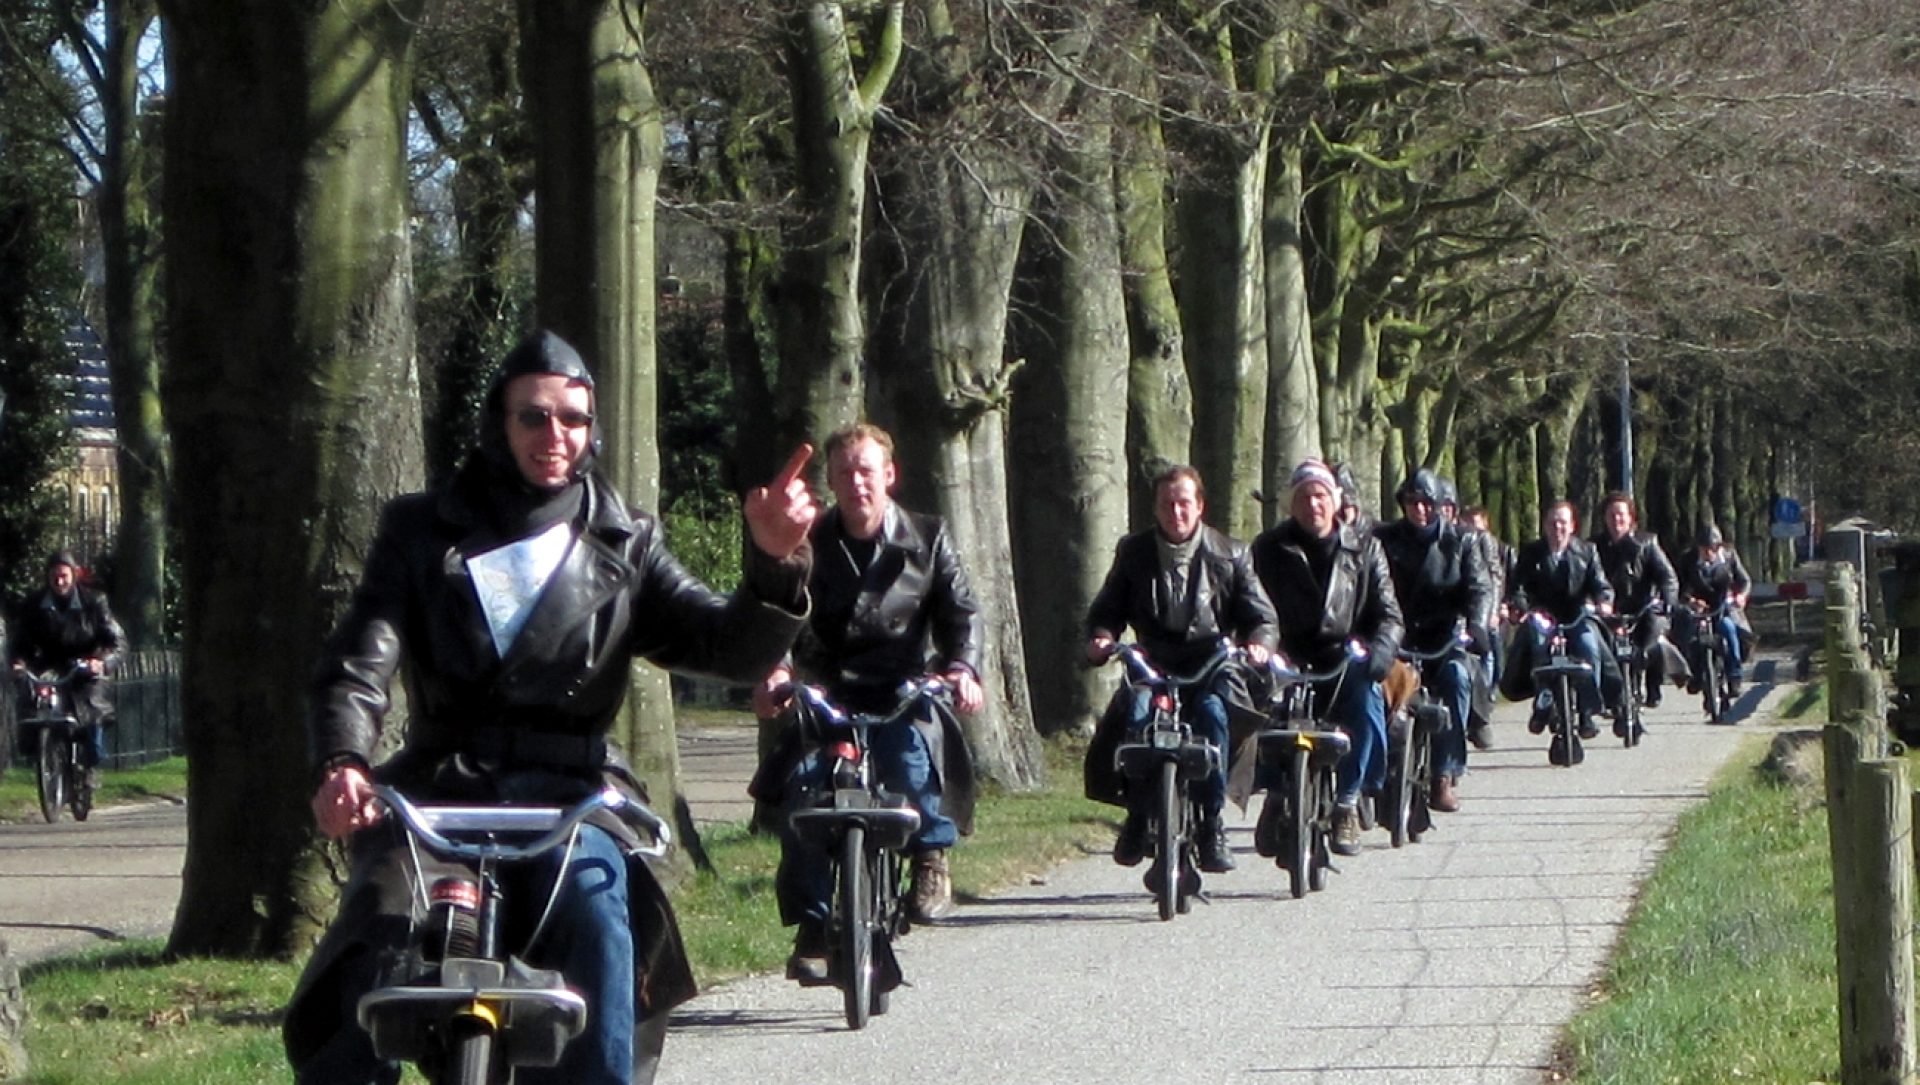 Choppertour Friesland: lekker rondtoeren op een elektrische scooter!